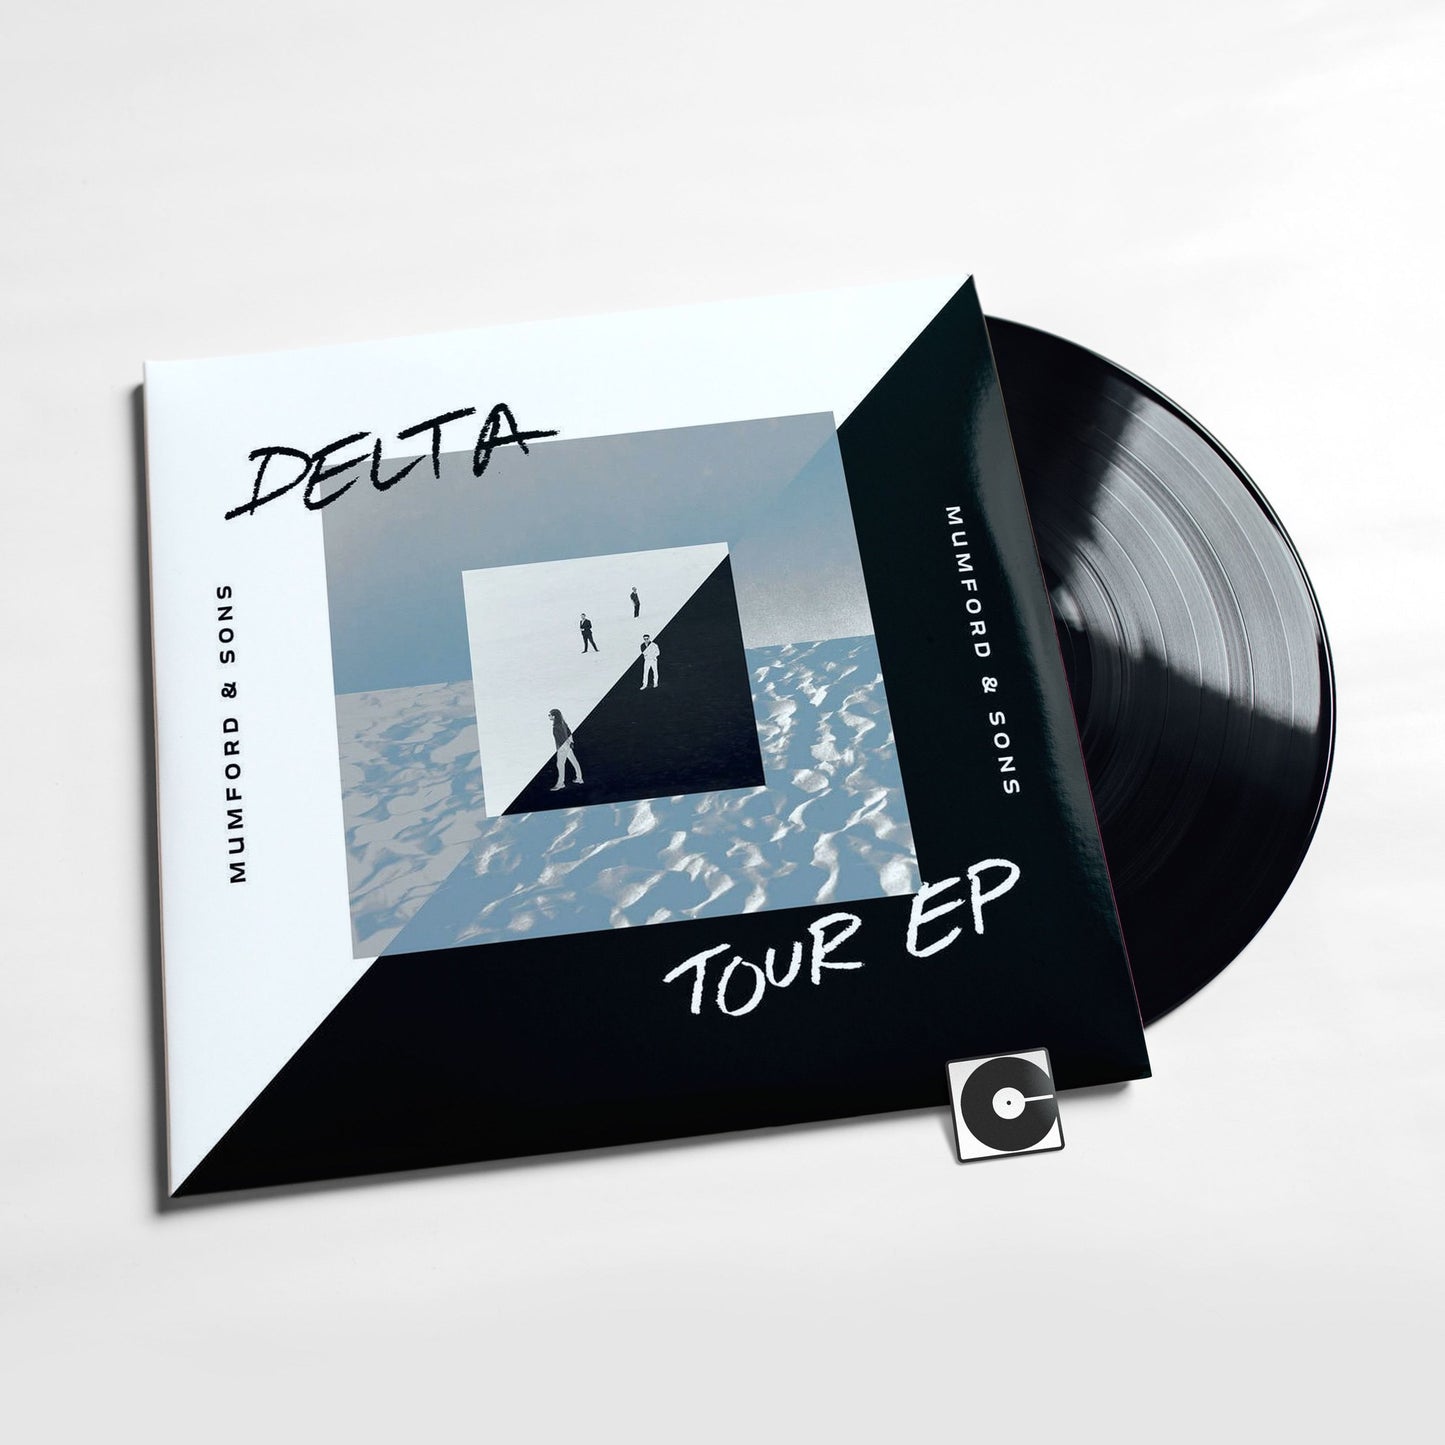 Mumford & Sons - "Delta Tour Live EP"